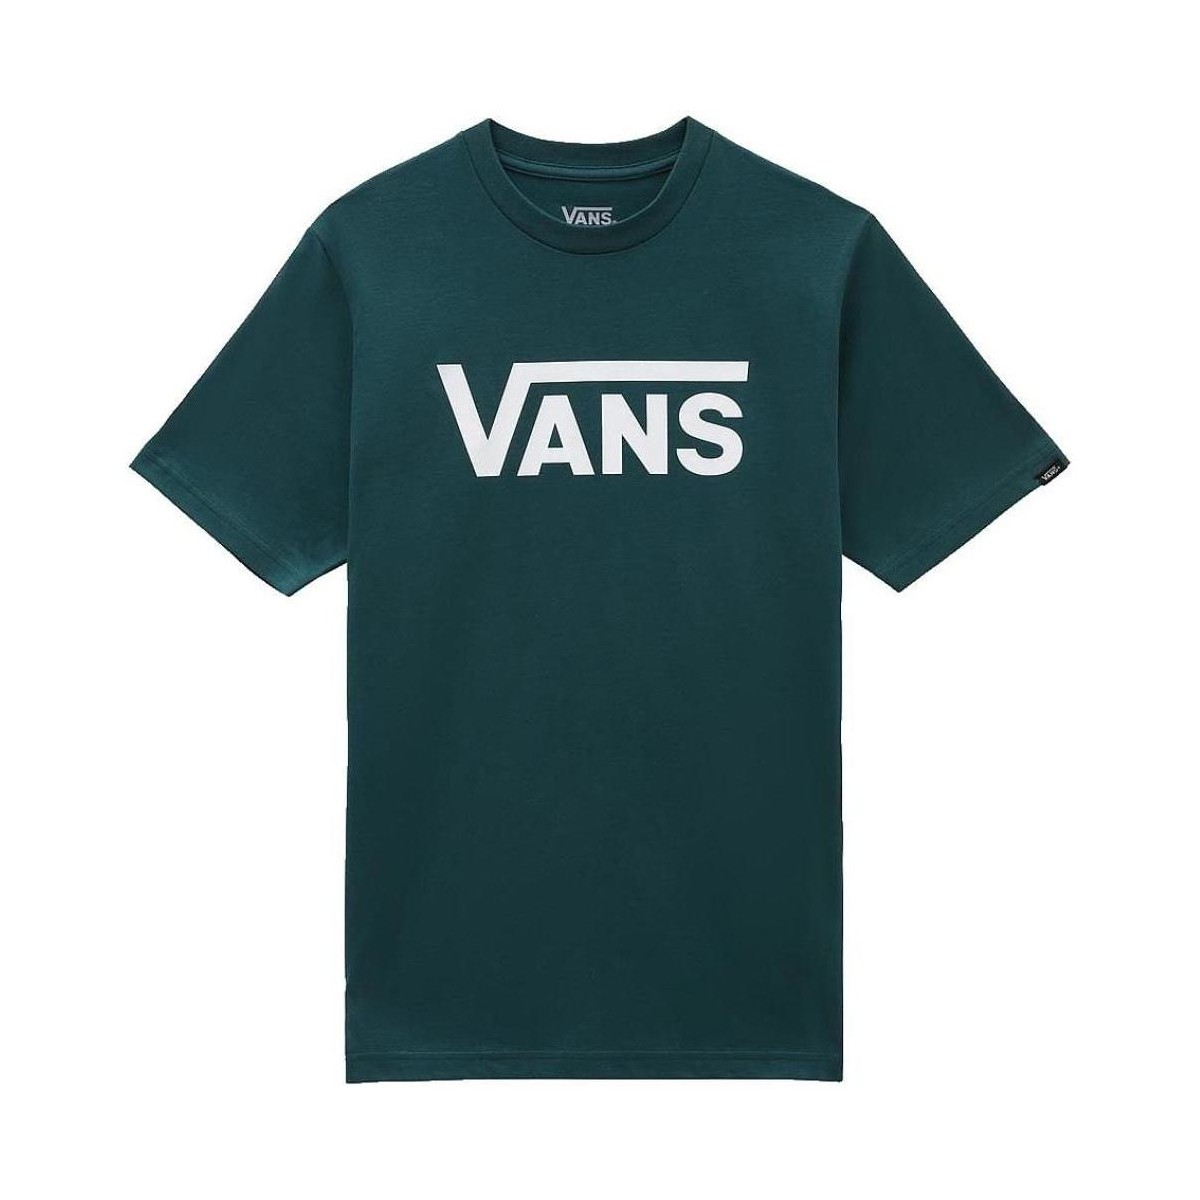 textil Niño Camisetas manga corta Vans VN000IVFY8M1 Green Verde